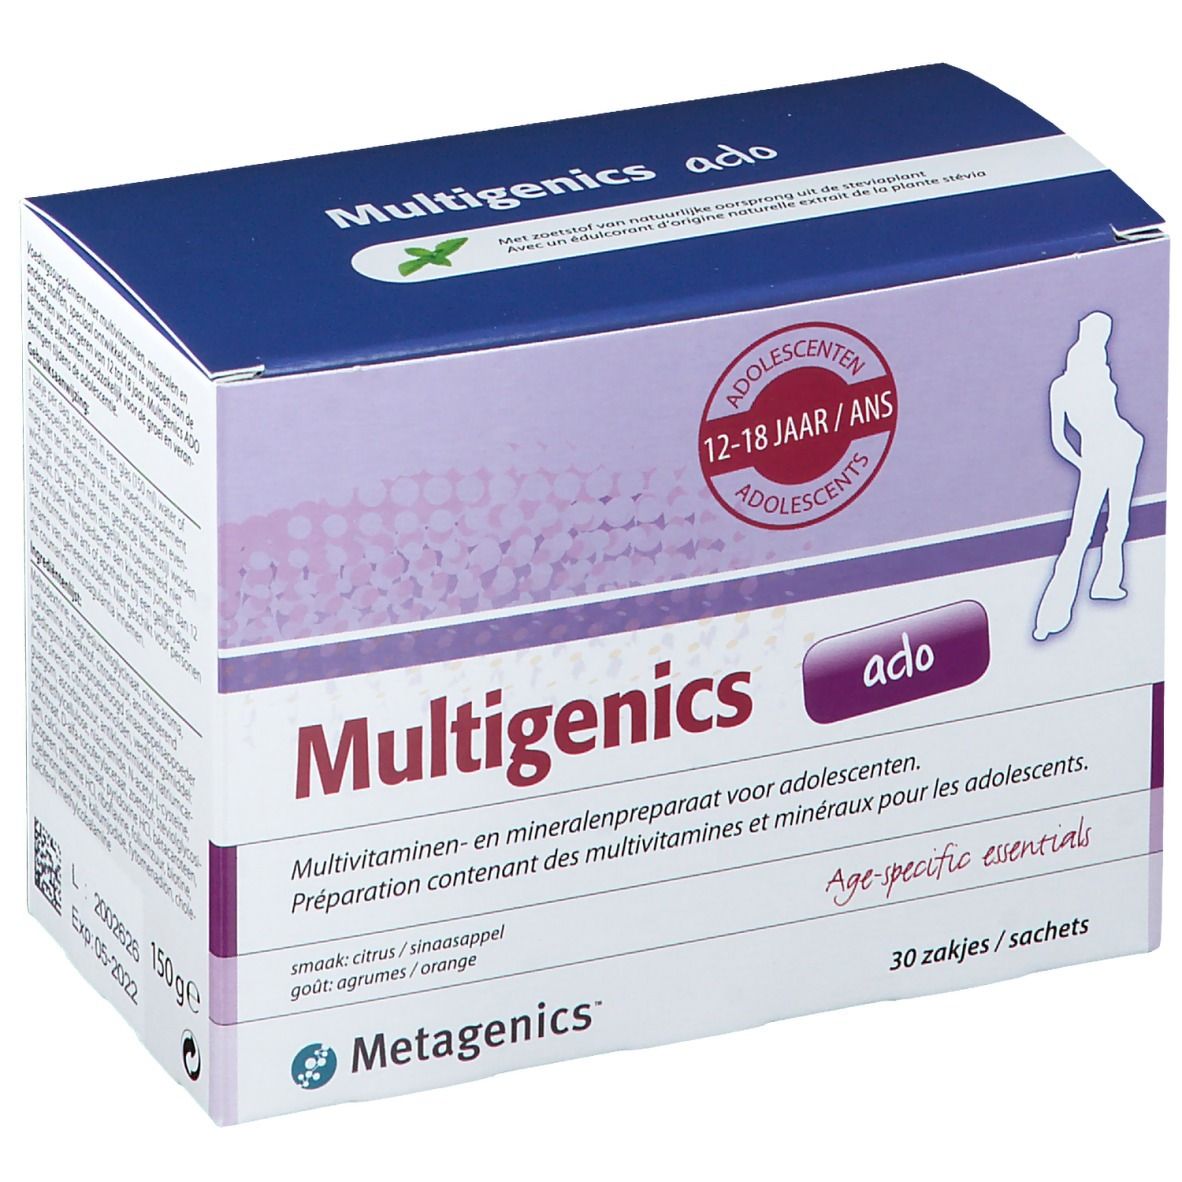 Multigenics Ado